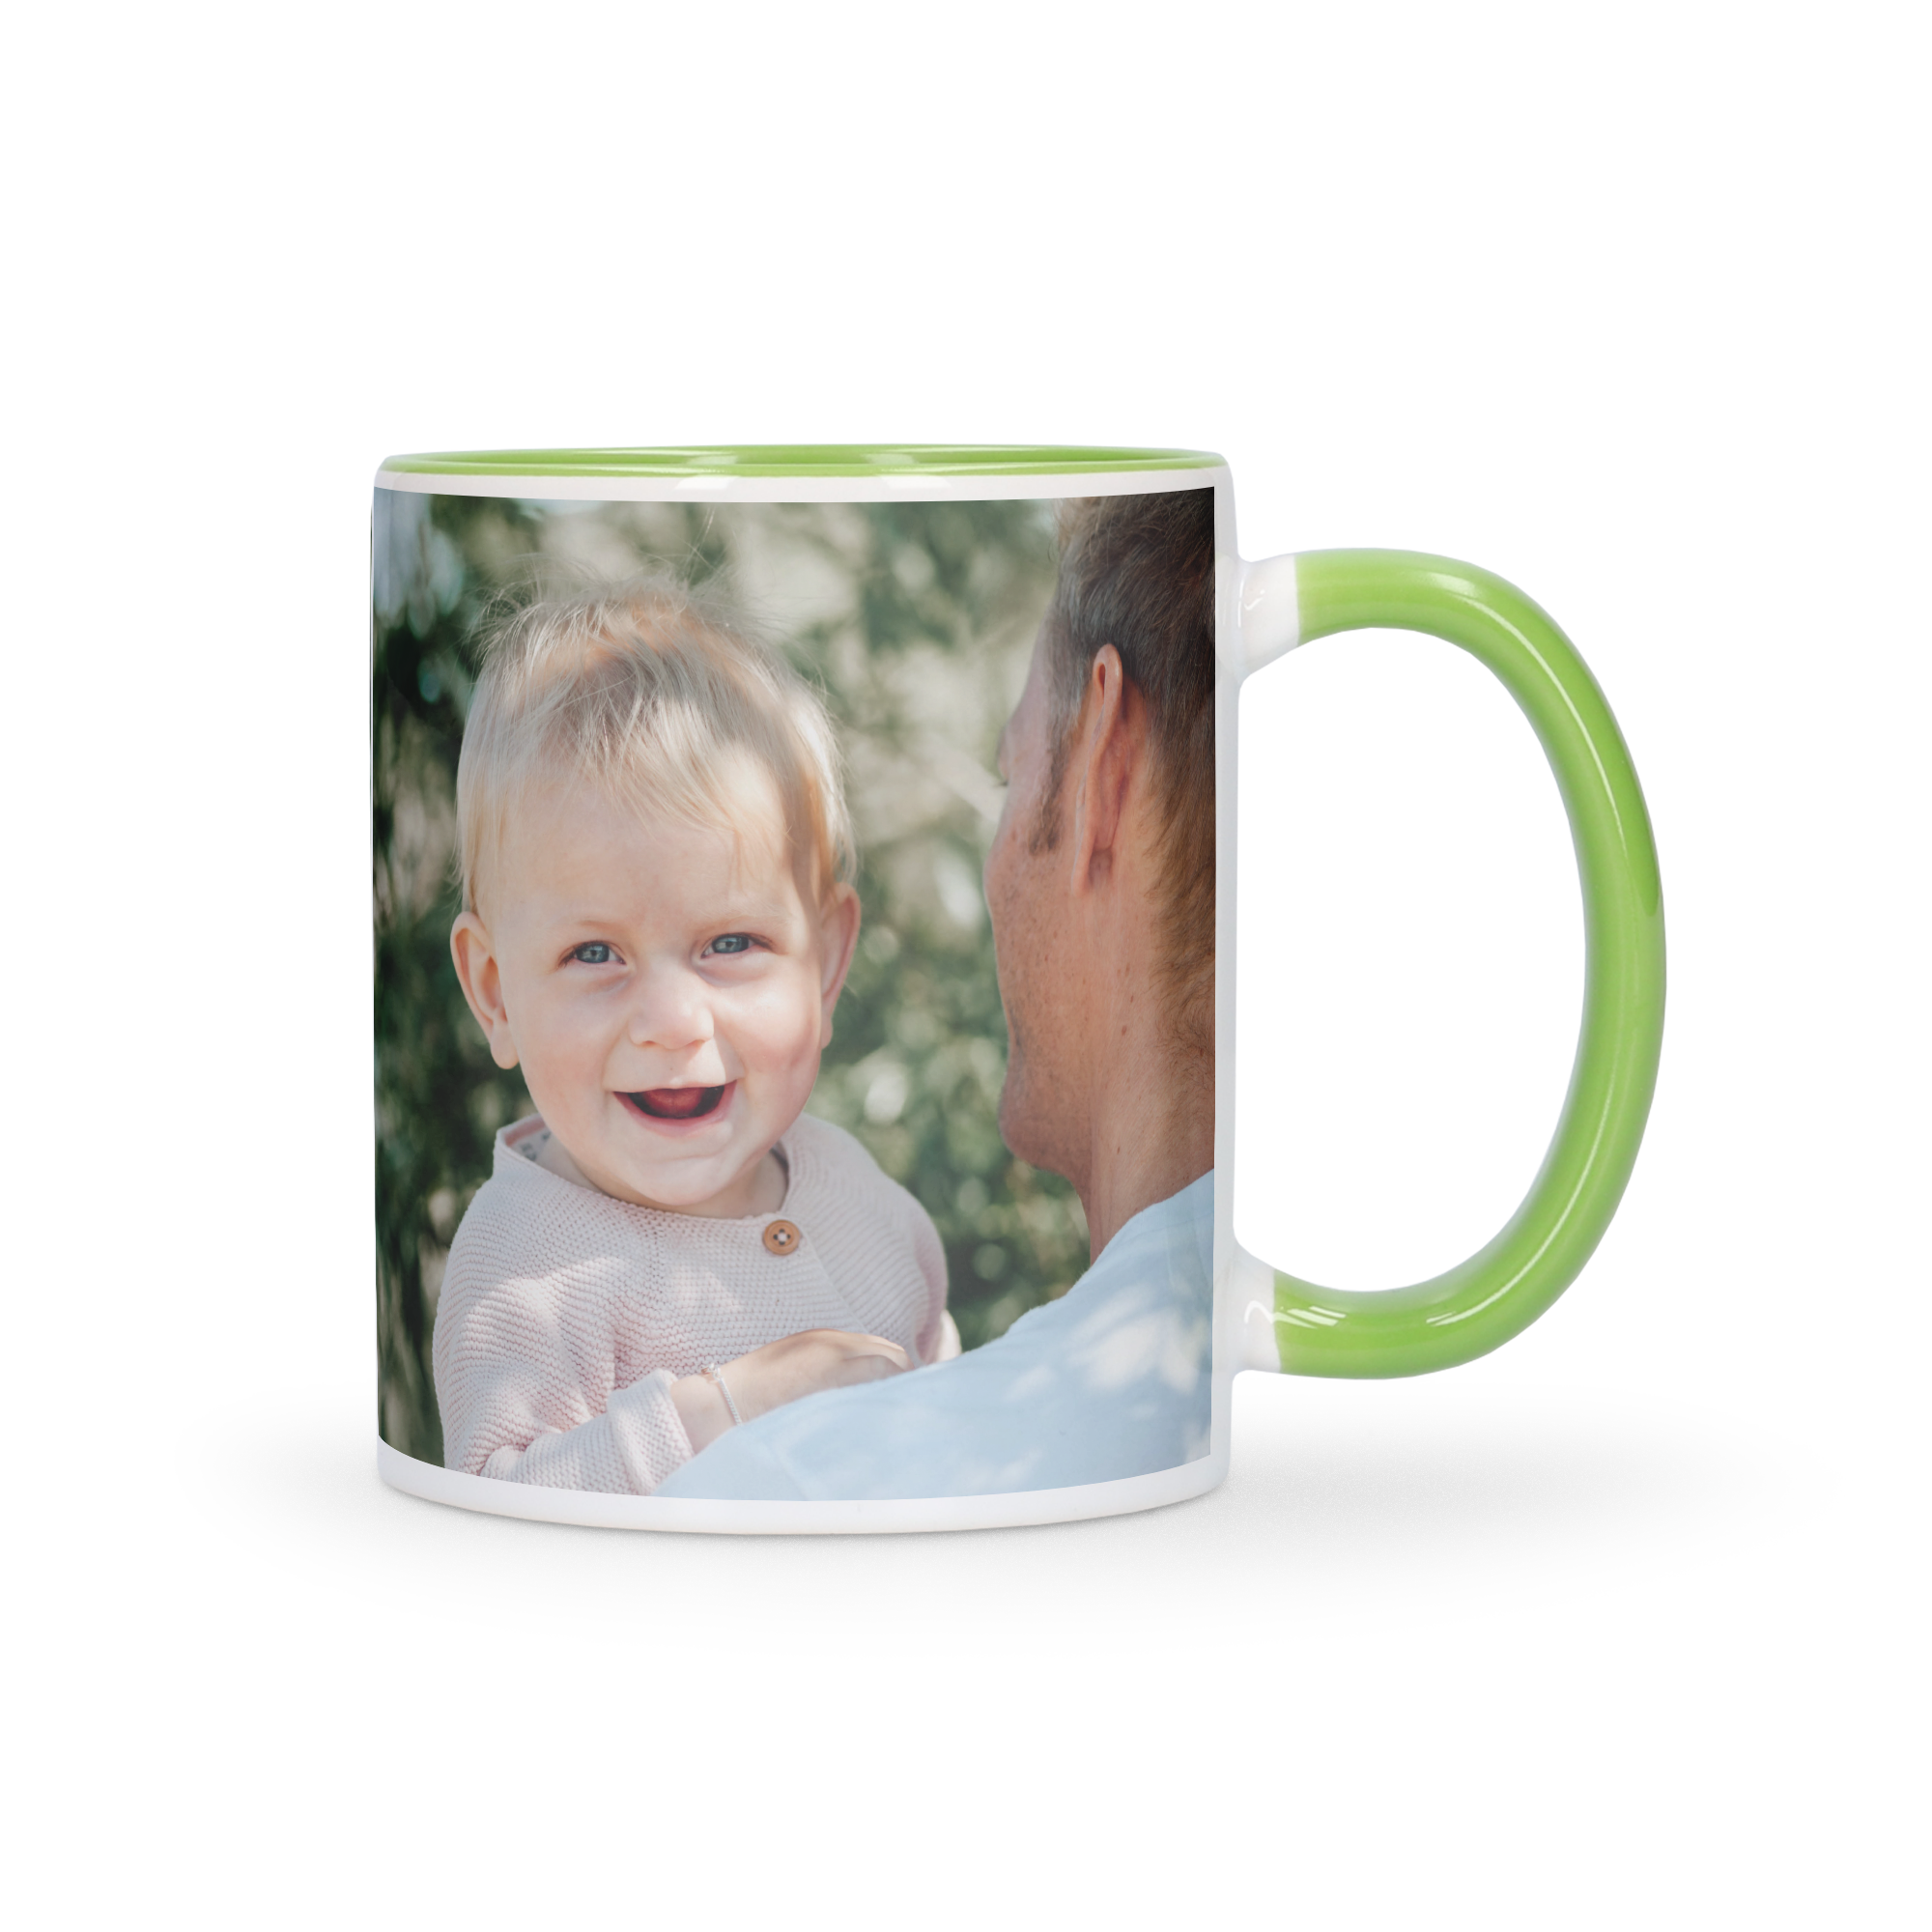 Personalised Mug - Green